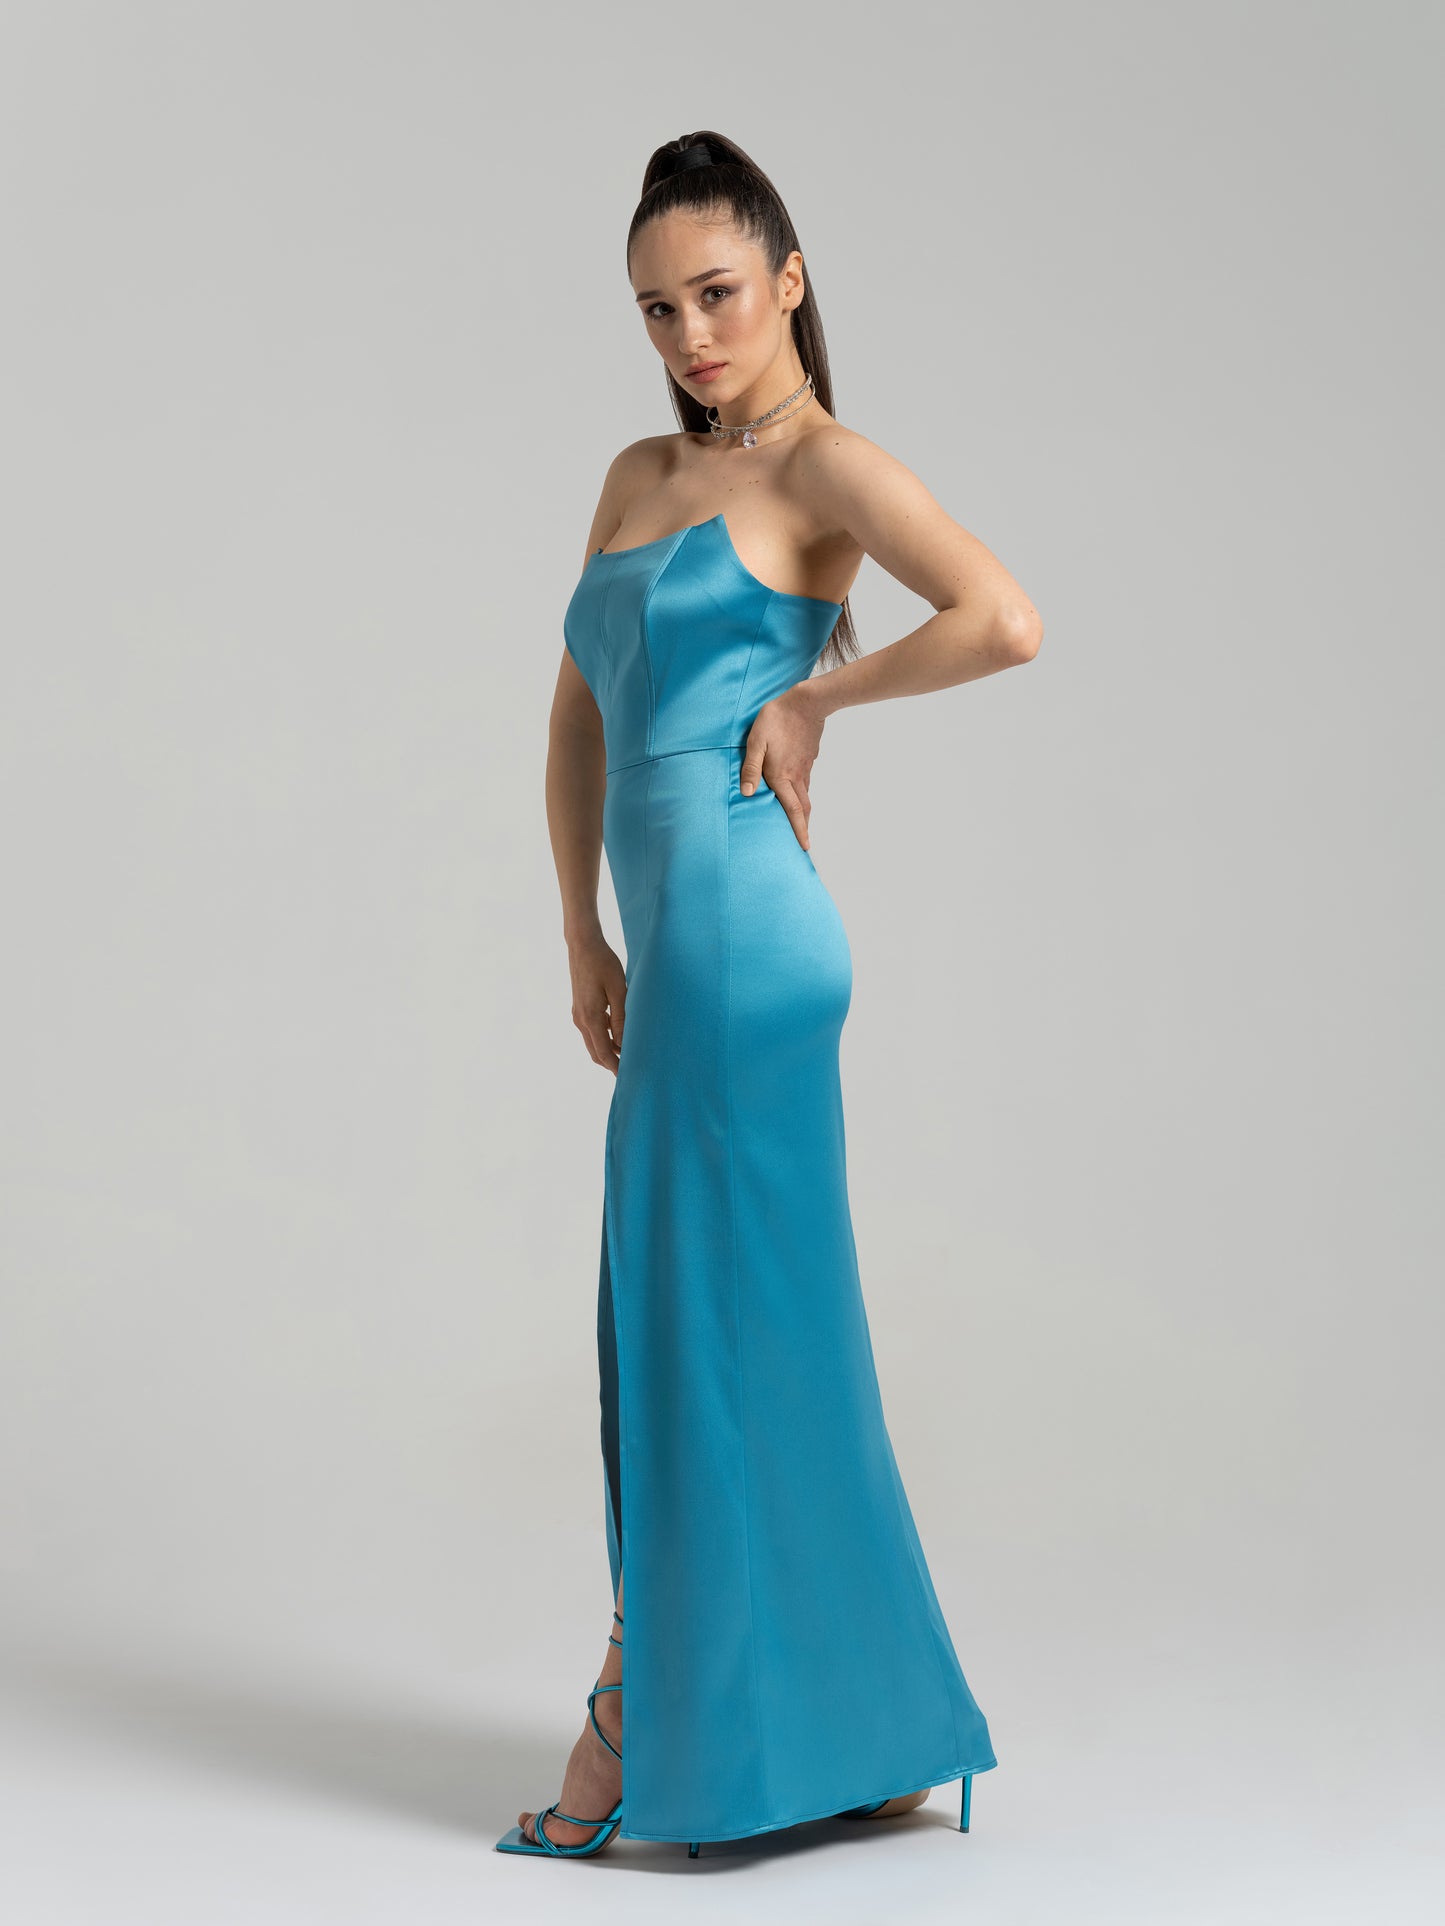 Queen of Hearts Satin Maxi Dress - Capri Blue by Tia Dorraine Women's Luxury Fashion Designer Clothing Brand